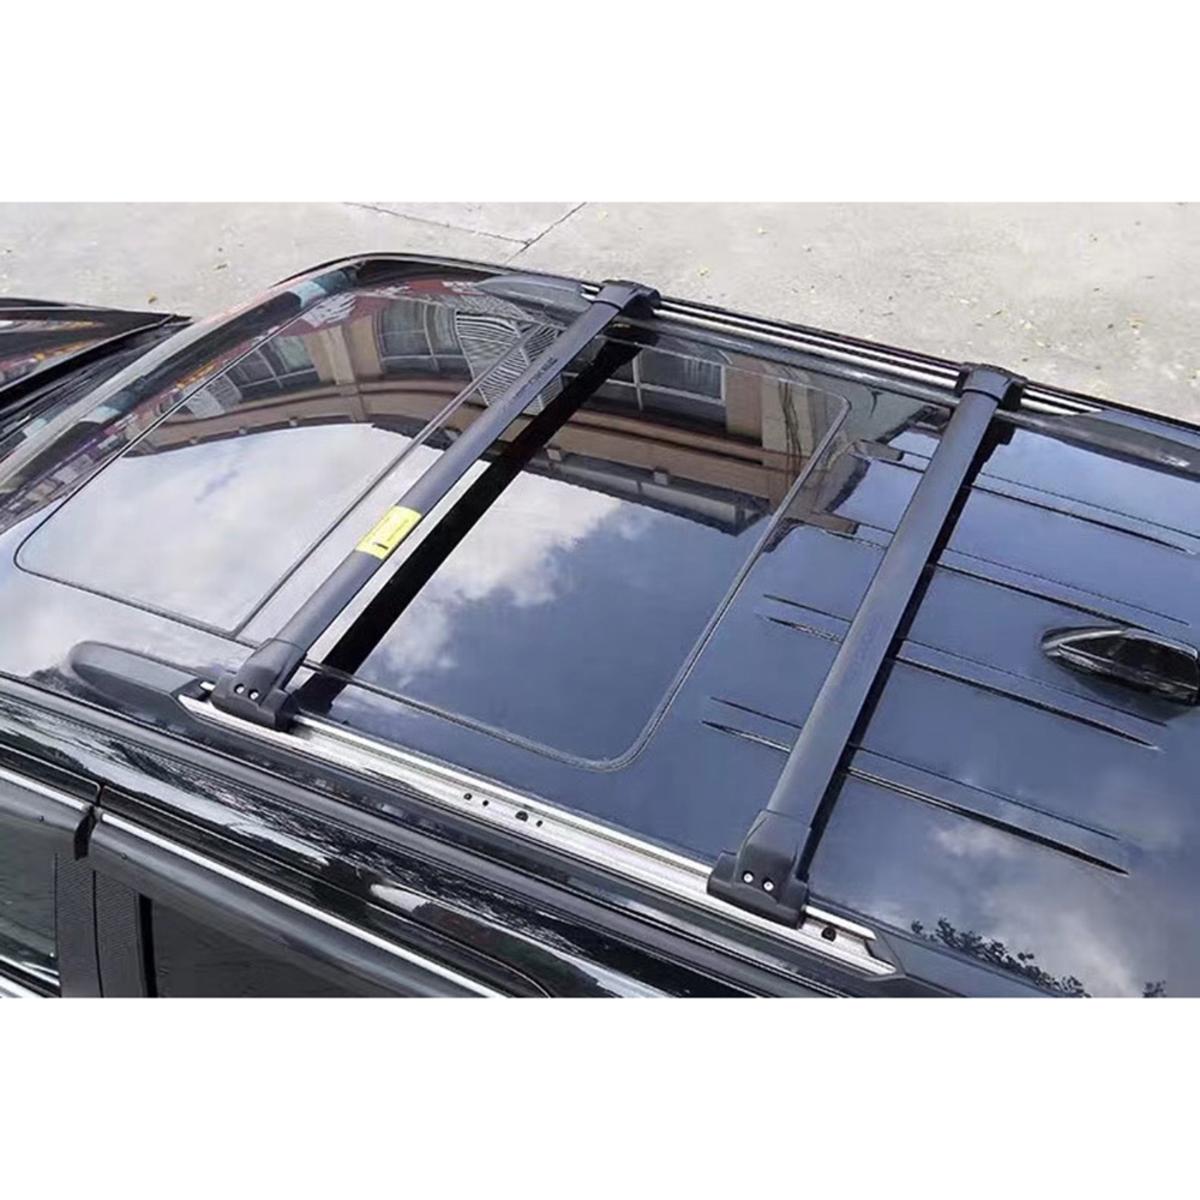 Trustmade 4 x 4 Car Parts Aluminium Roof Rack for Jeep Grand Cherokee 2011-2019